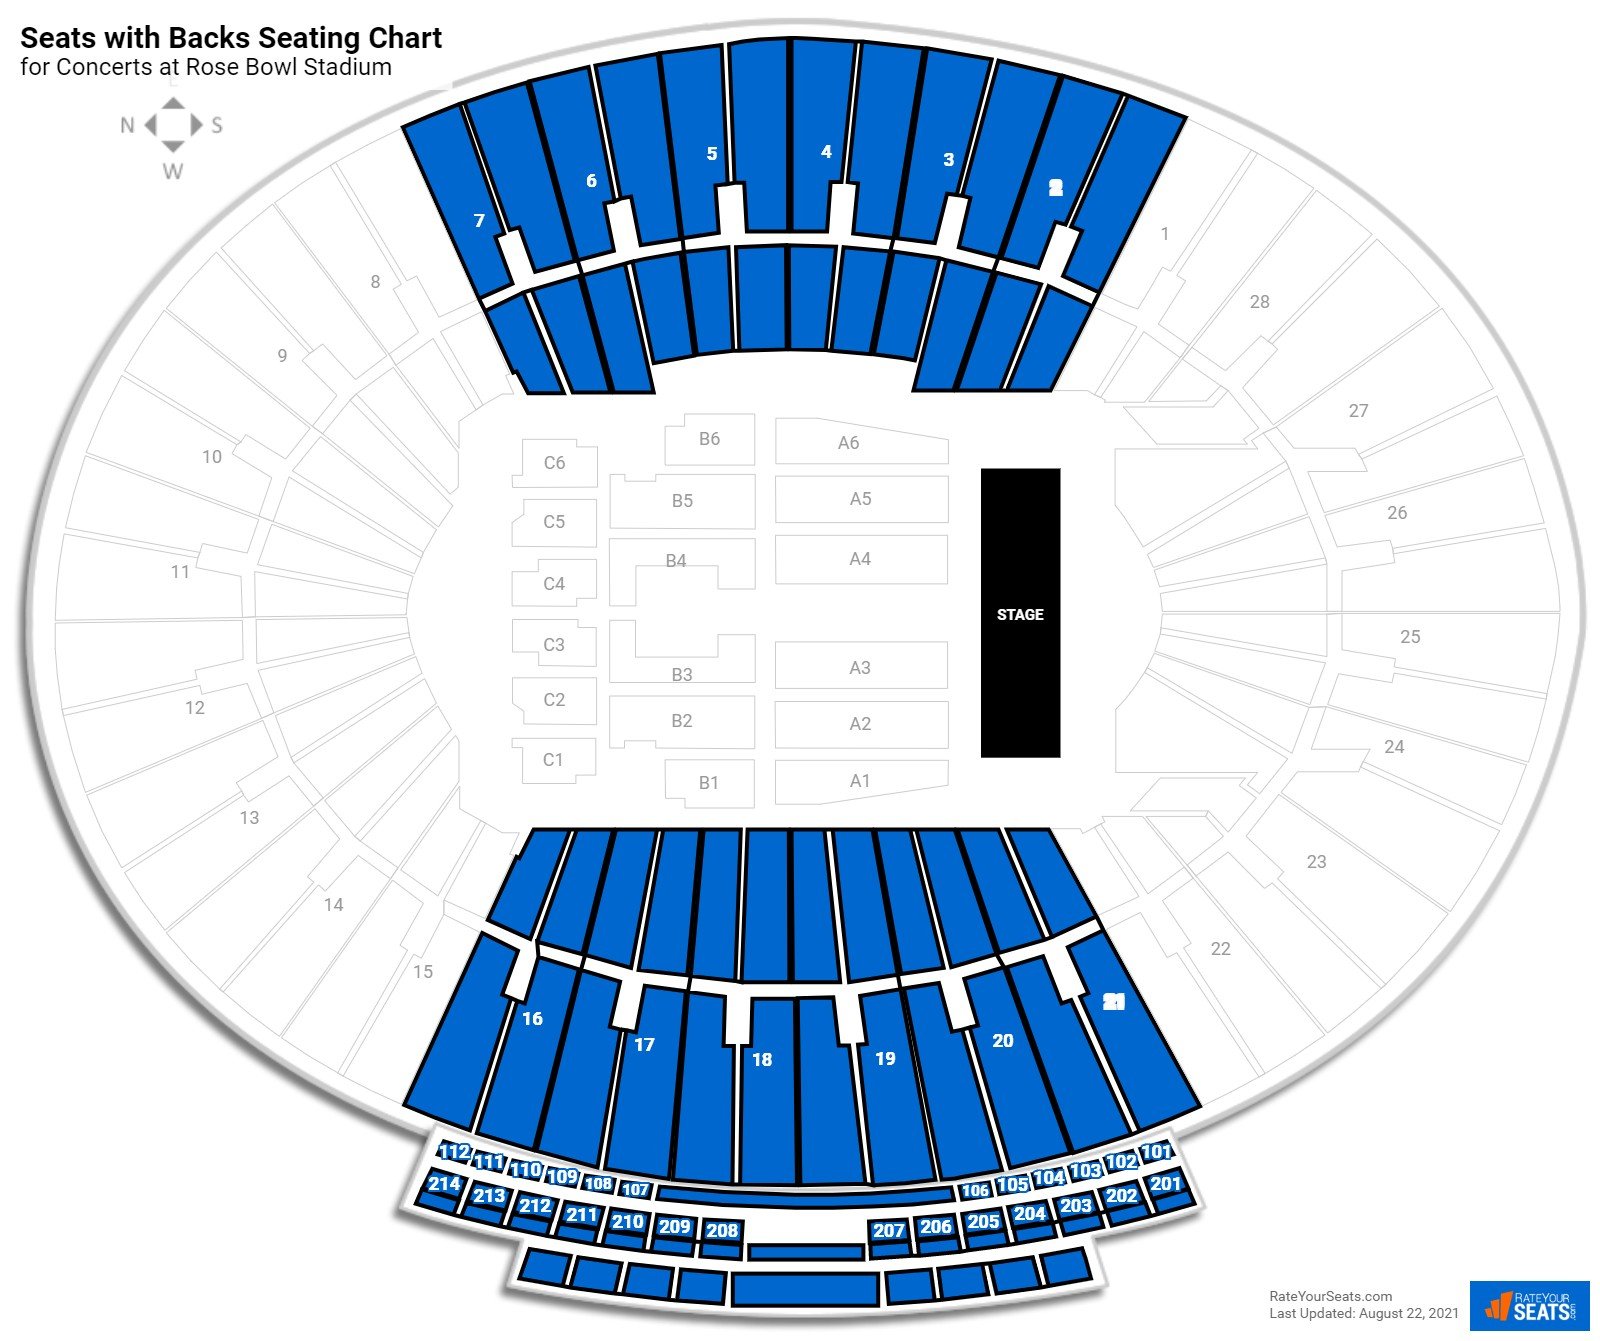 Rose Bowl Stadium Seats With Backs Rateyourseats Com